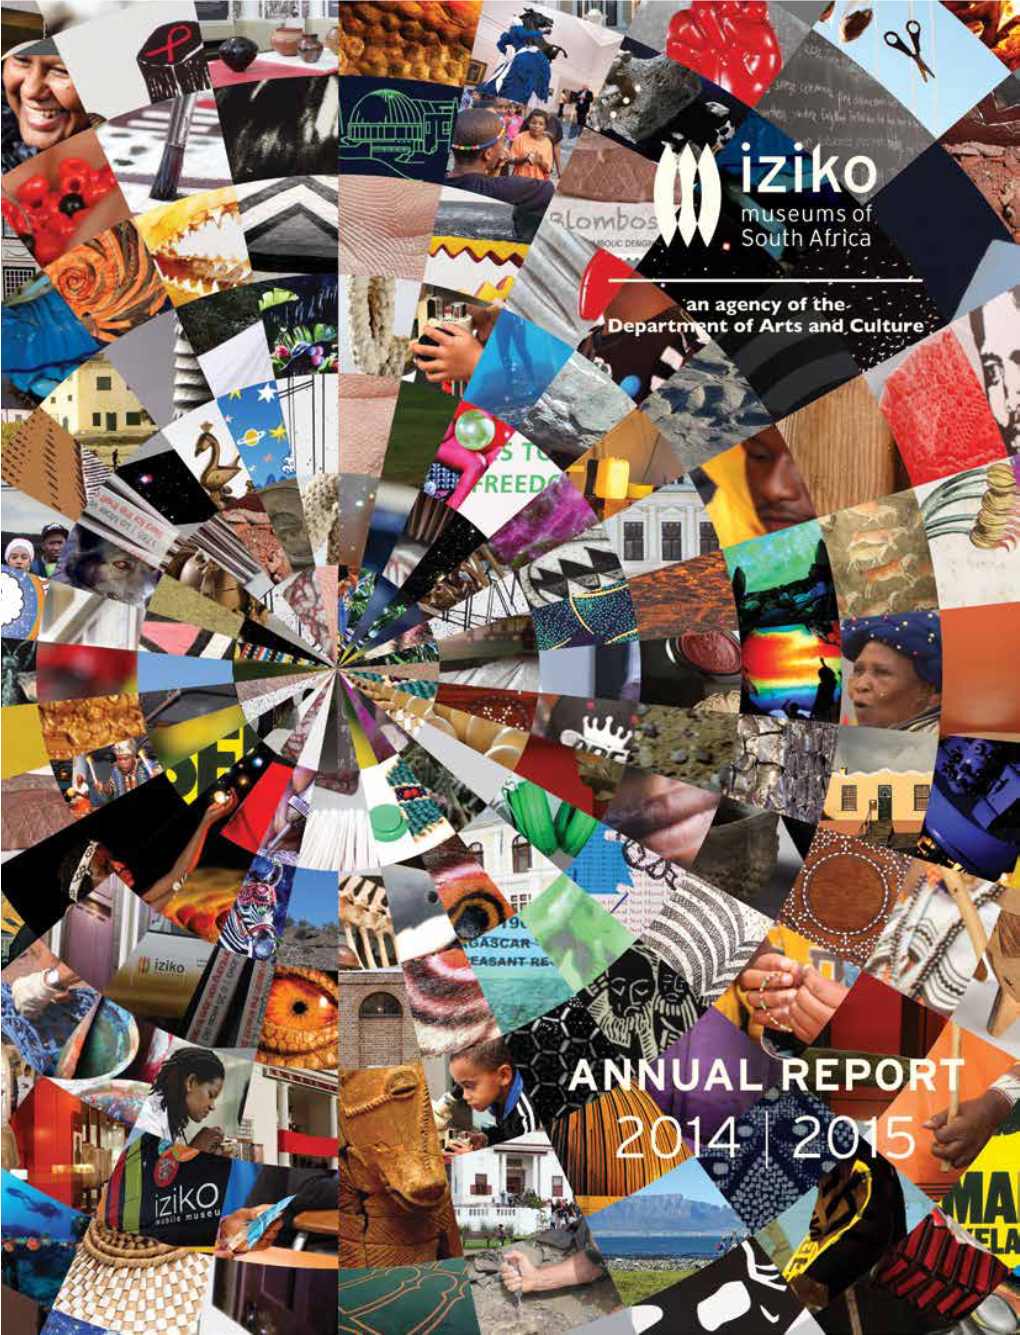 Iziko Museum 2014/15 Annual Report